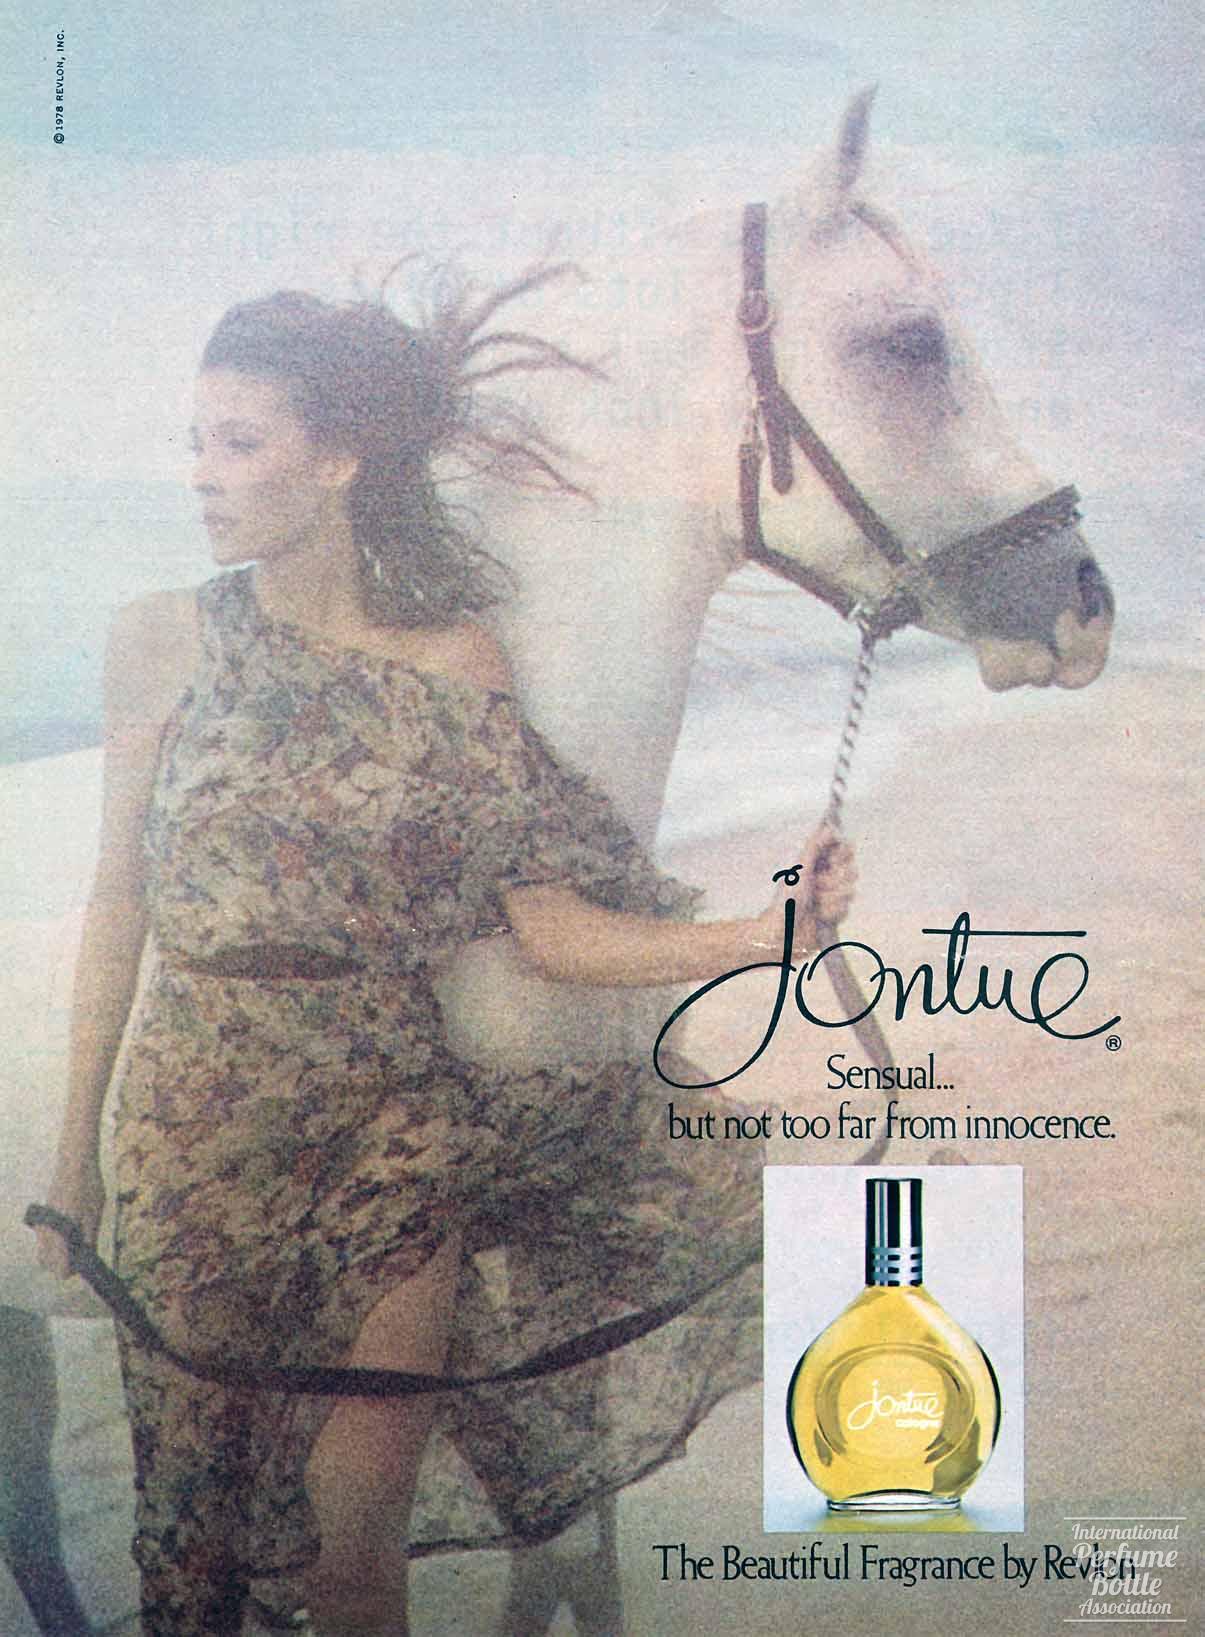 "Jontue" by Revlon Advertisement - 1978